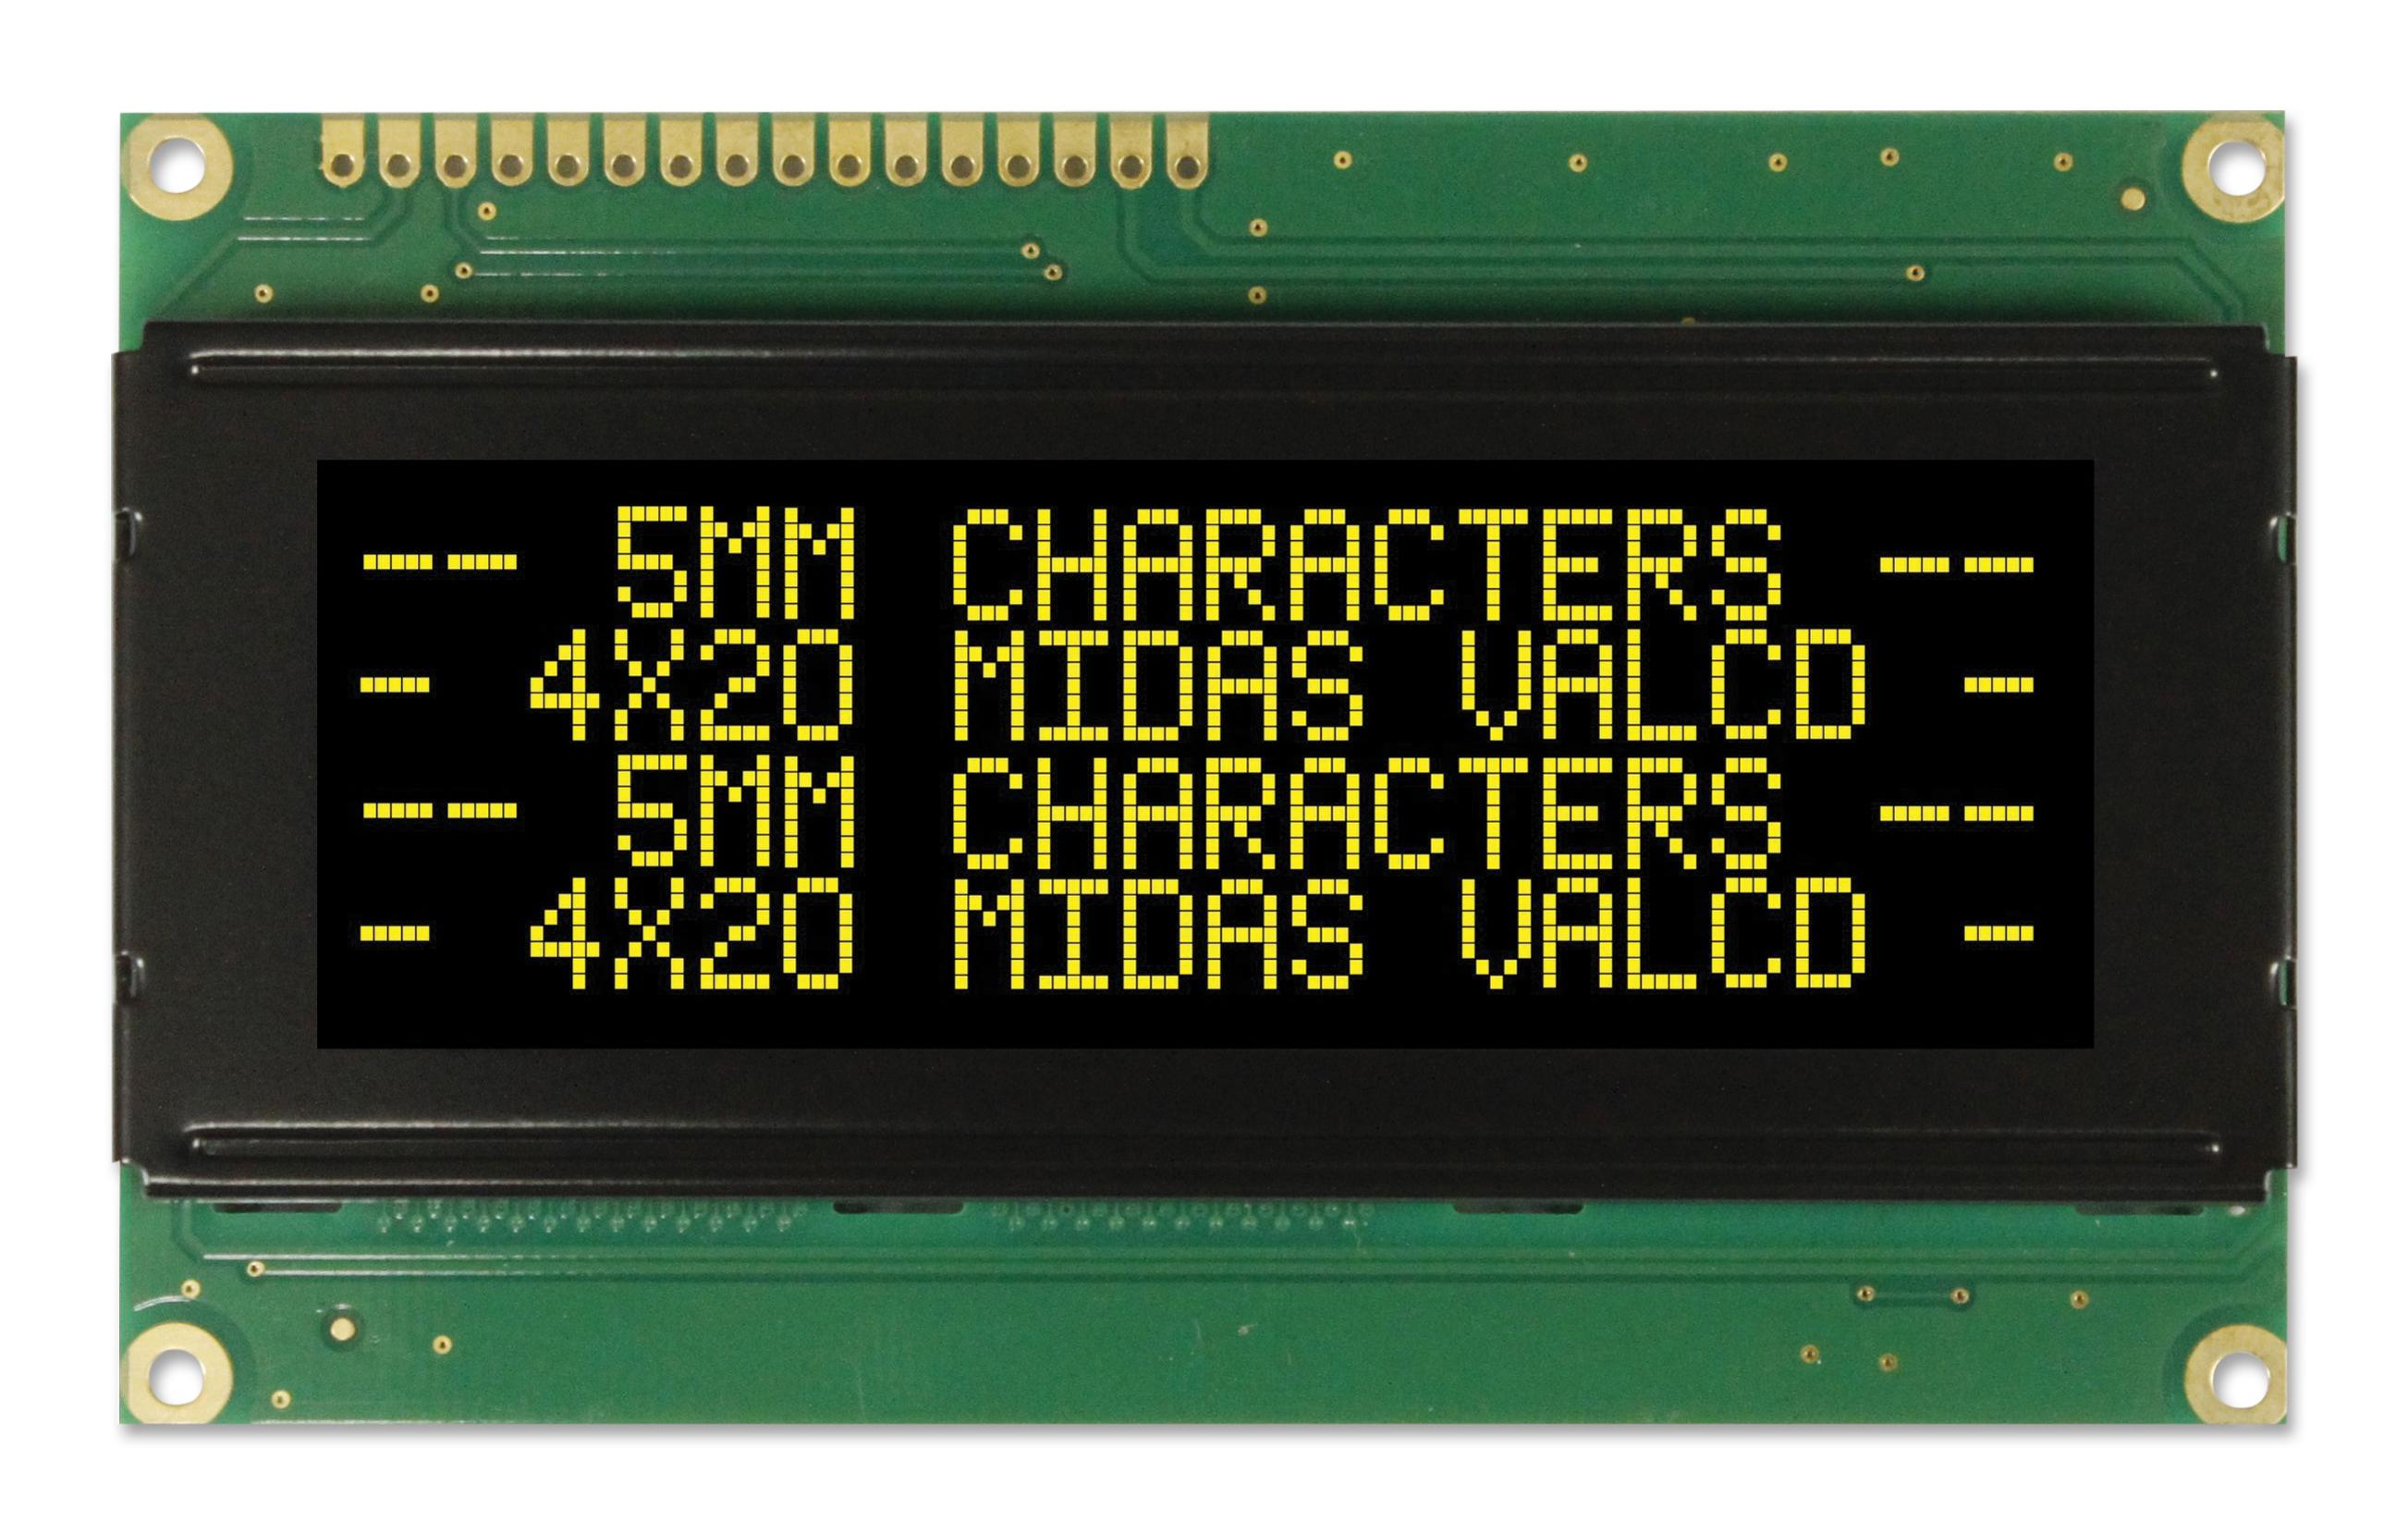 MC42005A12W-VNMLY LCD, ALPHA-NUM, 20 X 4, YELLOW-GREEN MIDAS